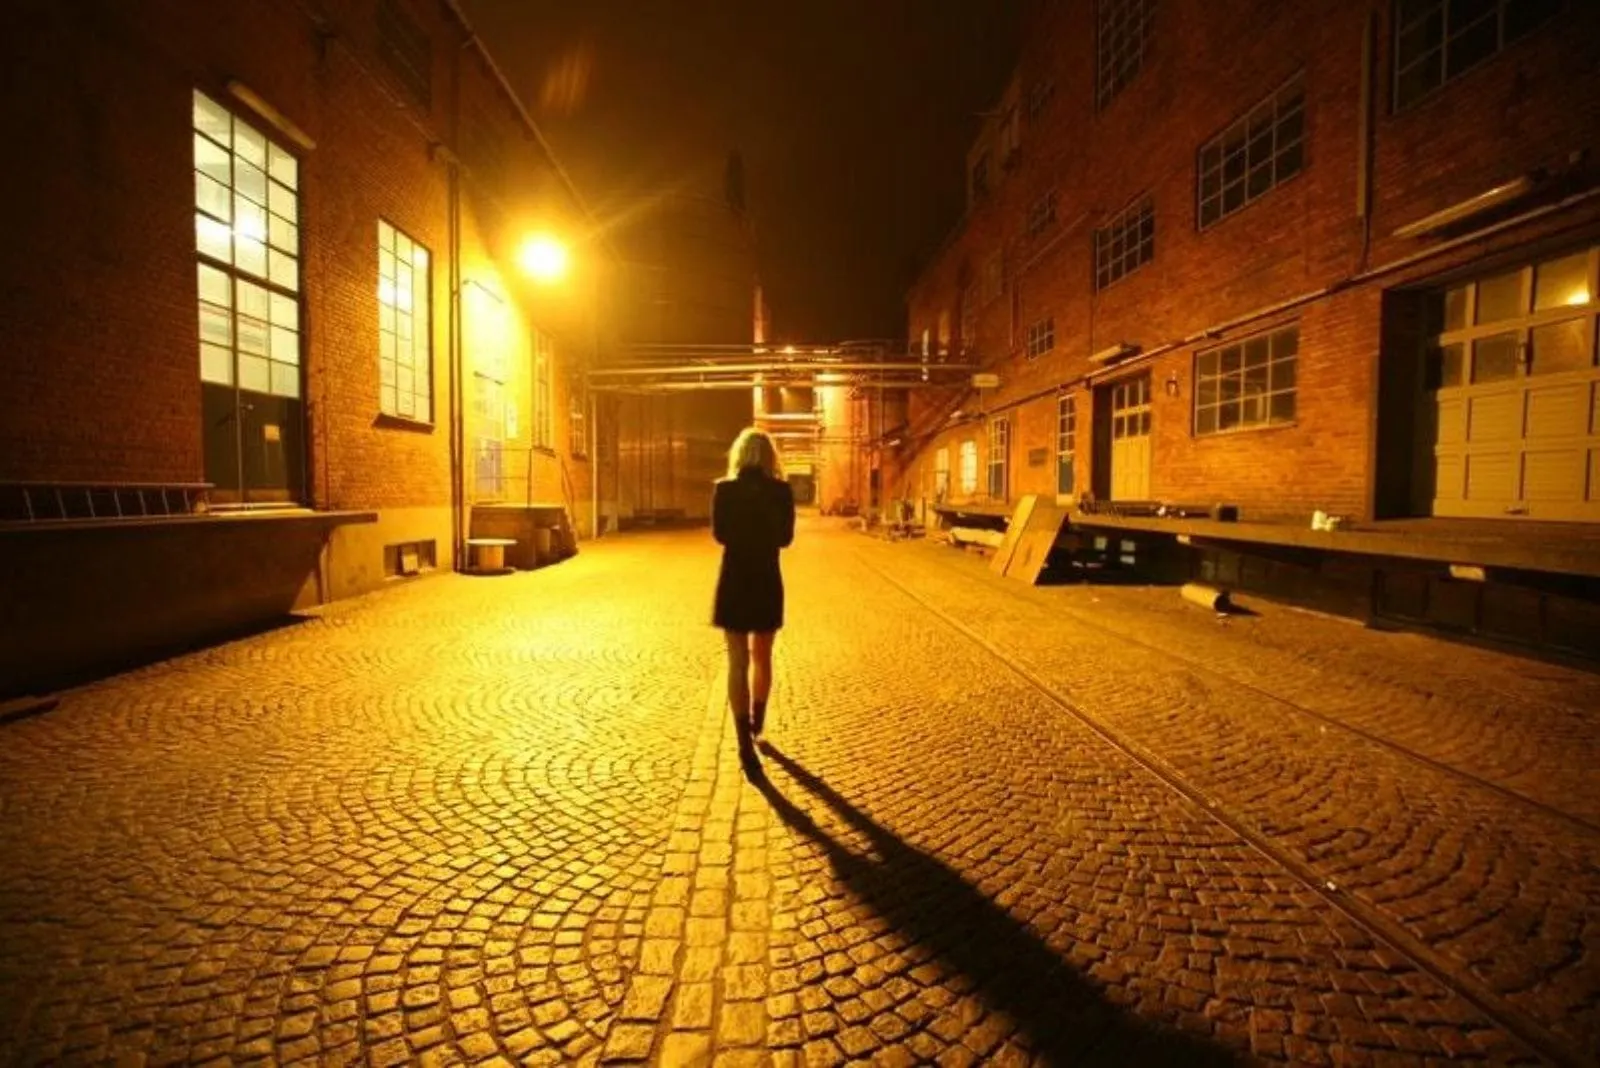 the woman walks down the street alone